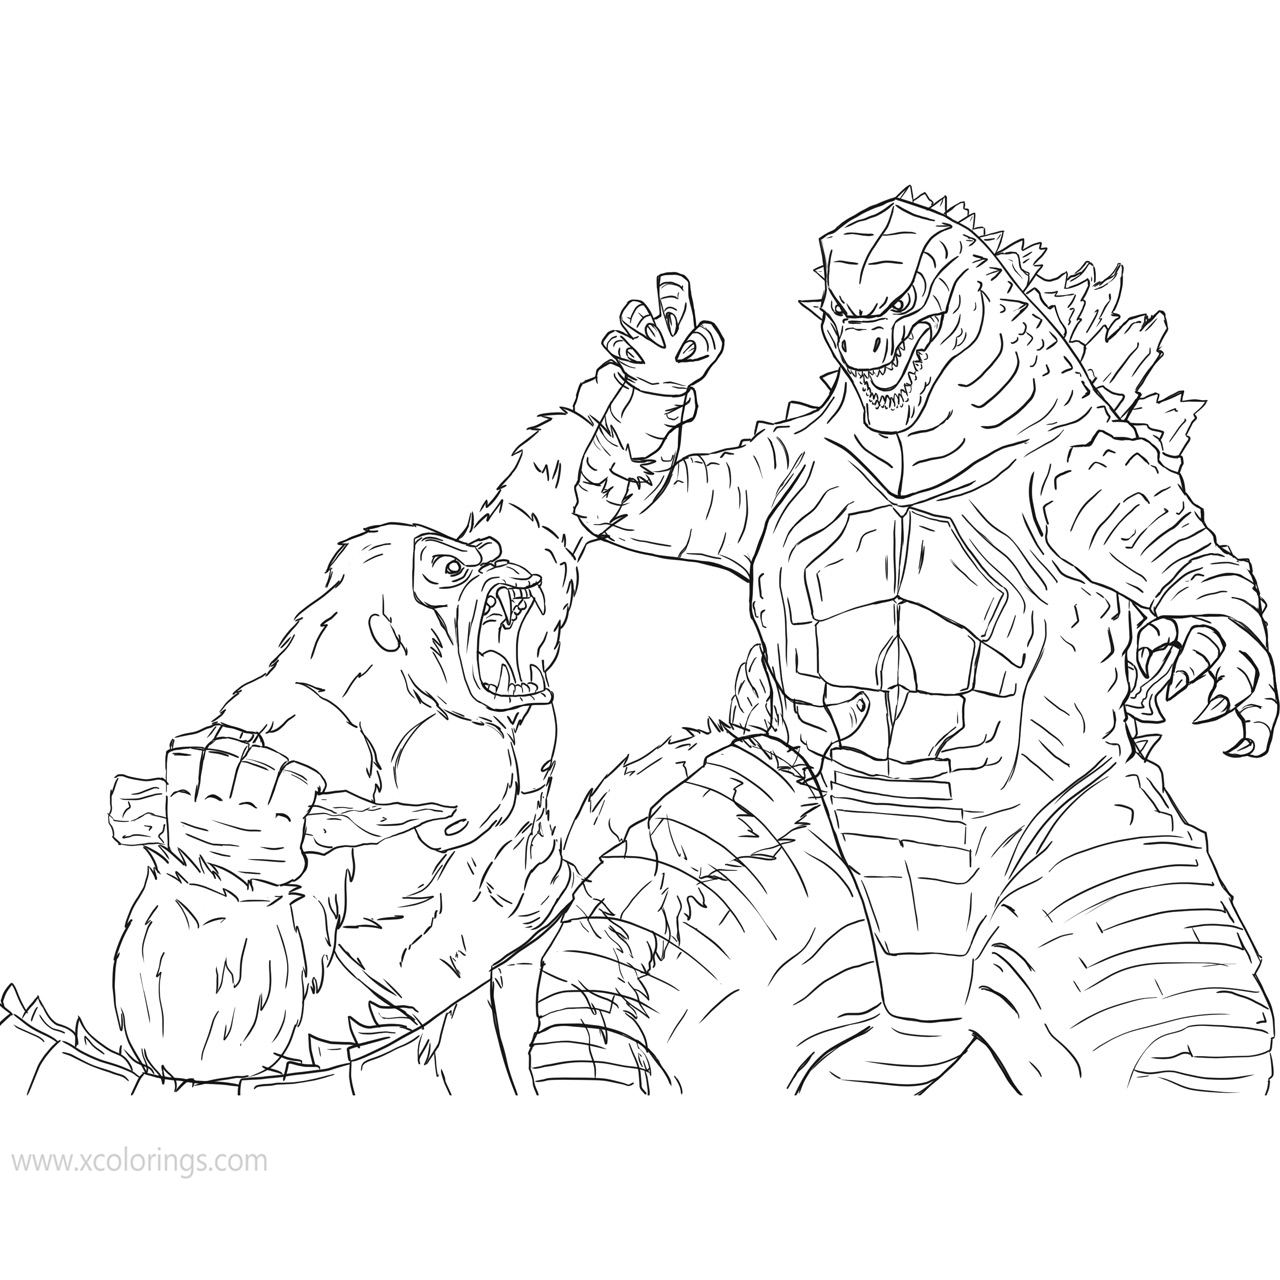 Battle of Godzilla Vs Kong Coloring Pages   XColorings.com